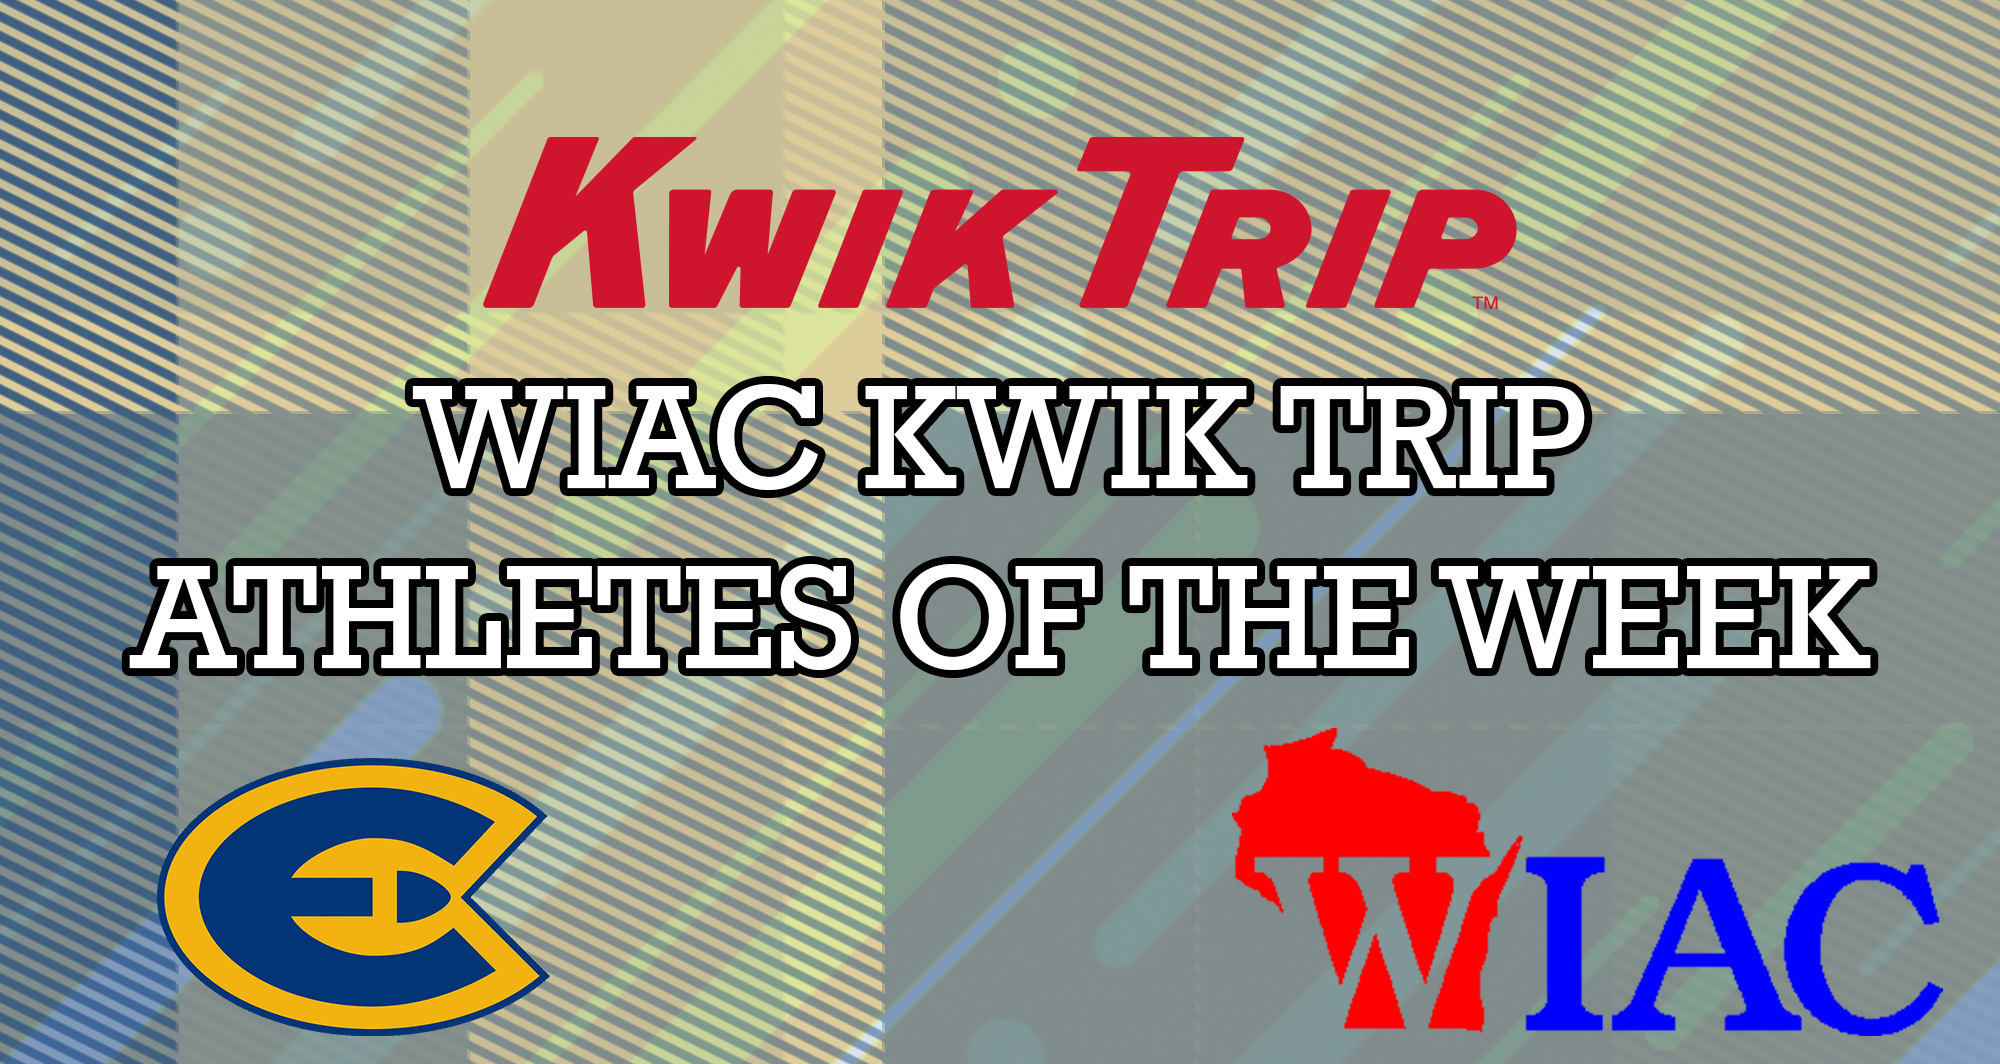 Martin, Dahlk, and Weaver Tabbed WIAC Kwik Trip Athletes of the Week